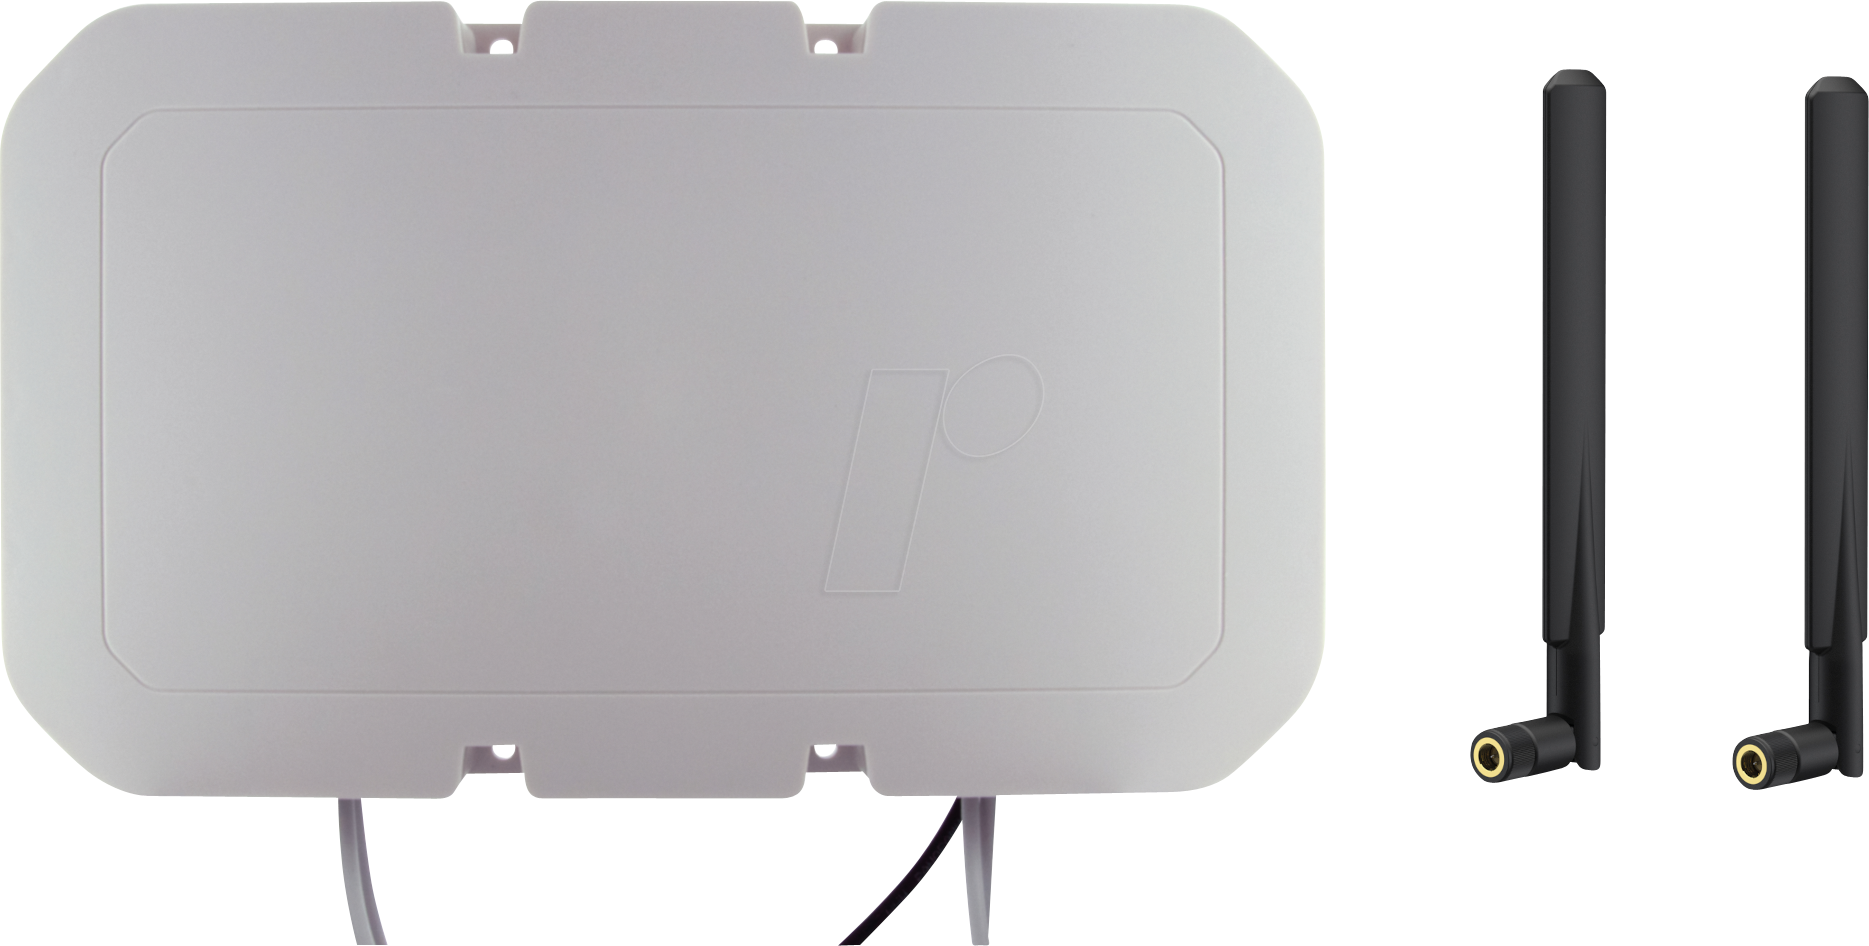 ANTKIT-4M2W1GBUI - Antennenkit für Router, Gebäude, Mobilfunk, WLAN, GPS